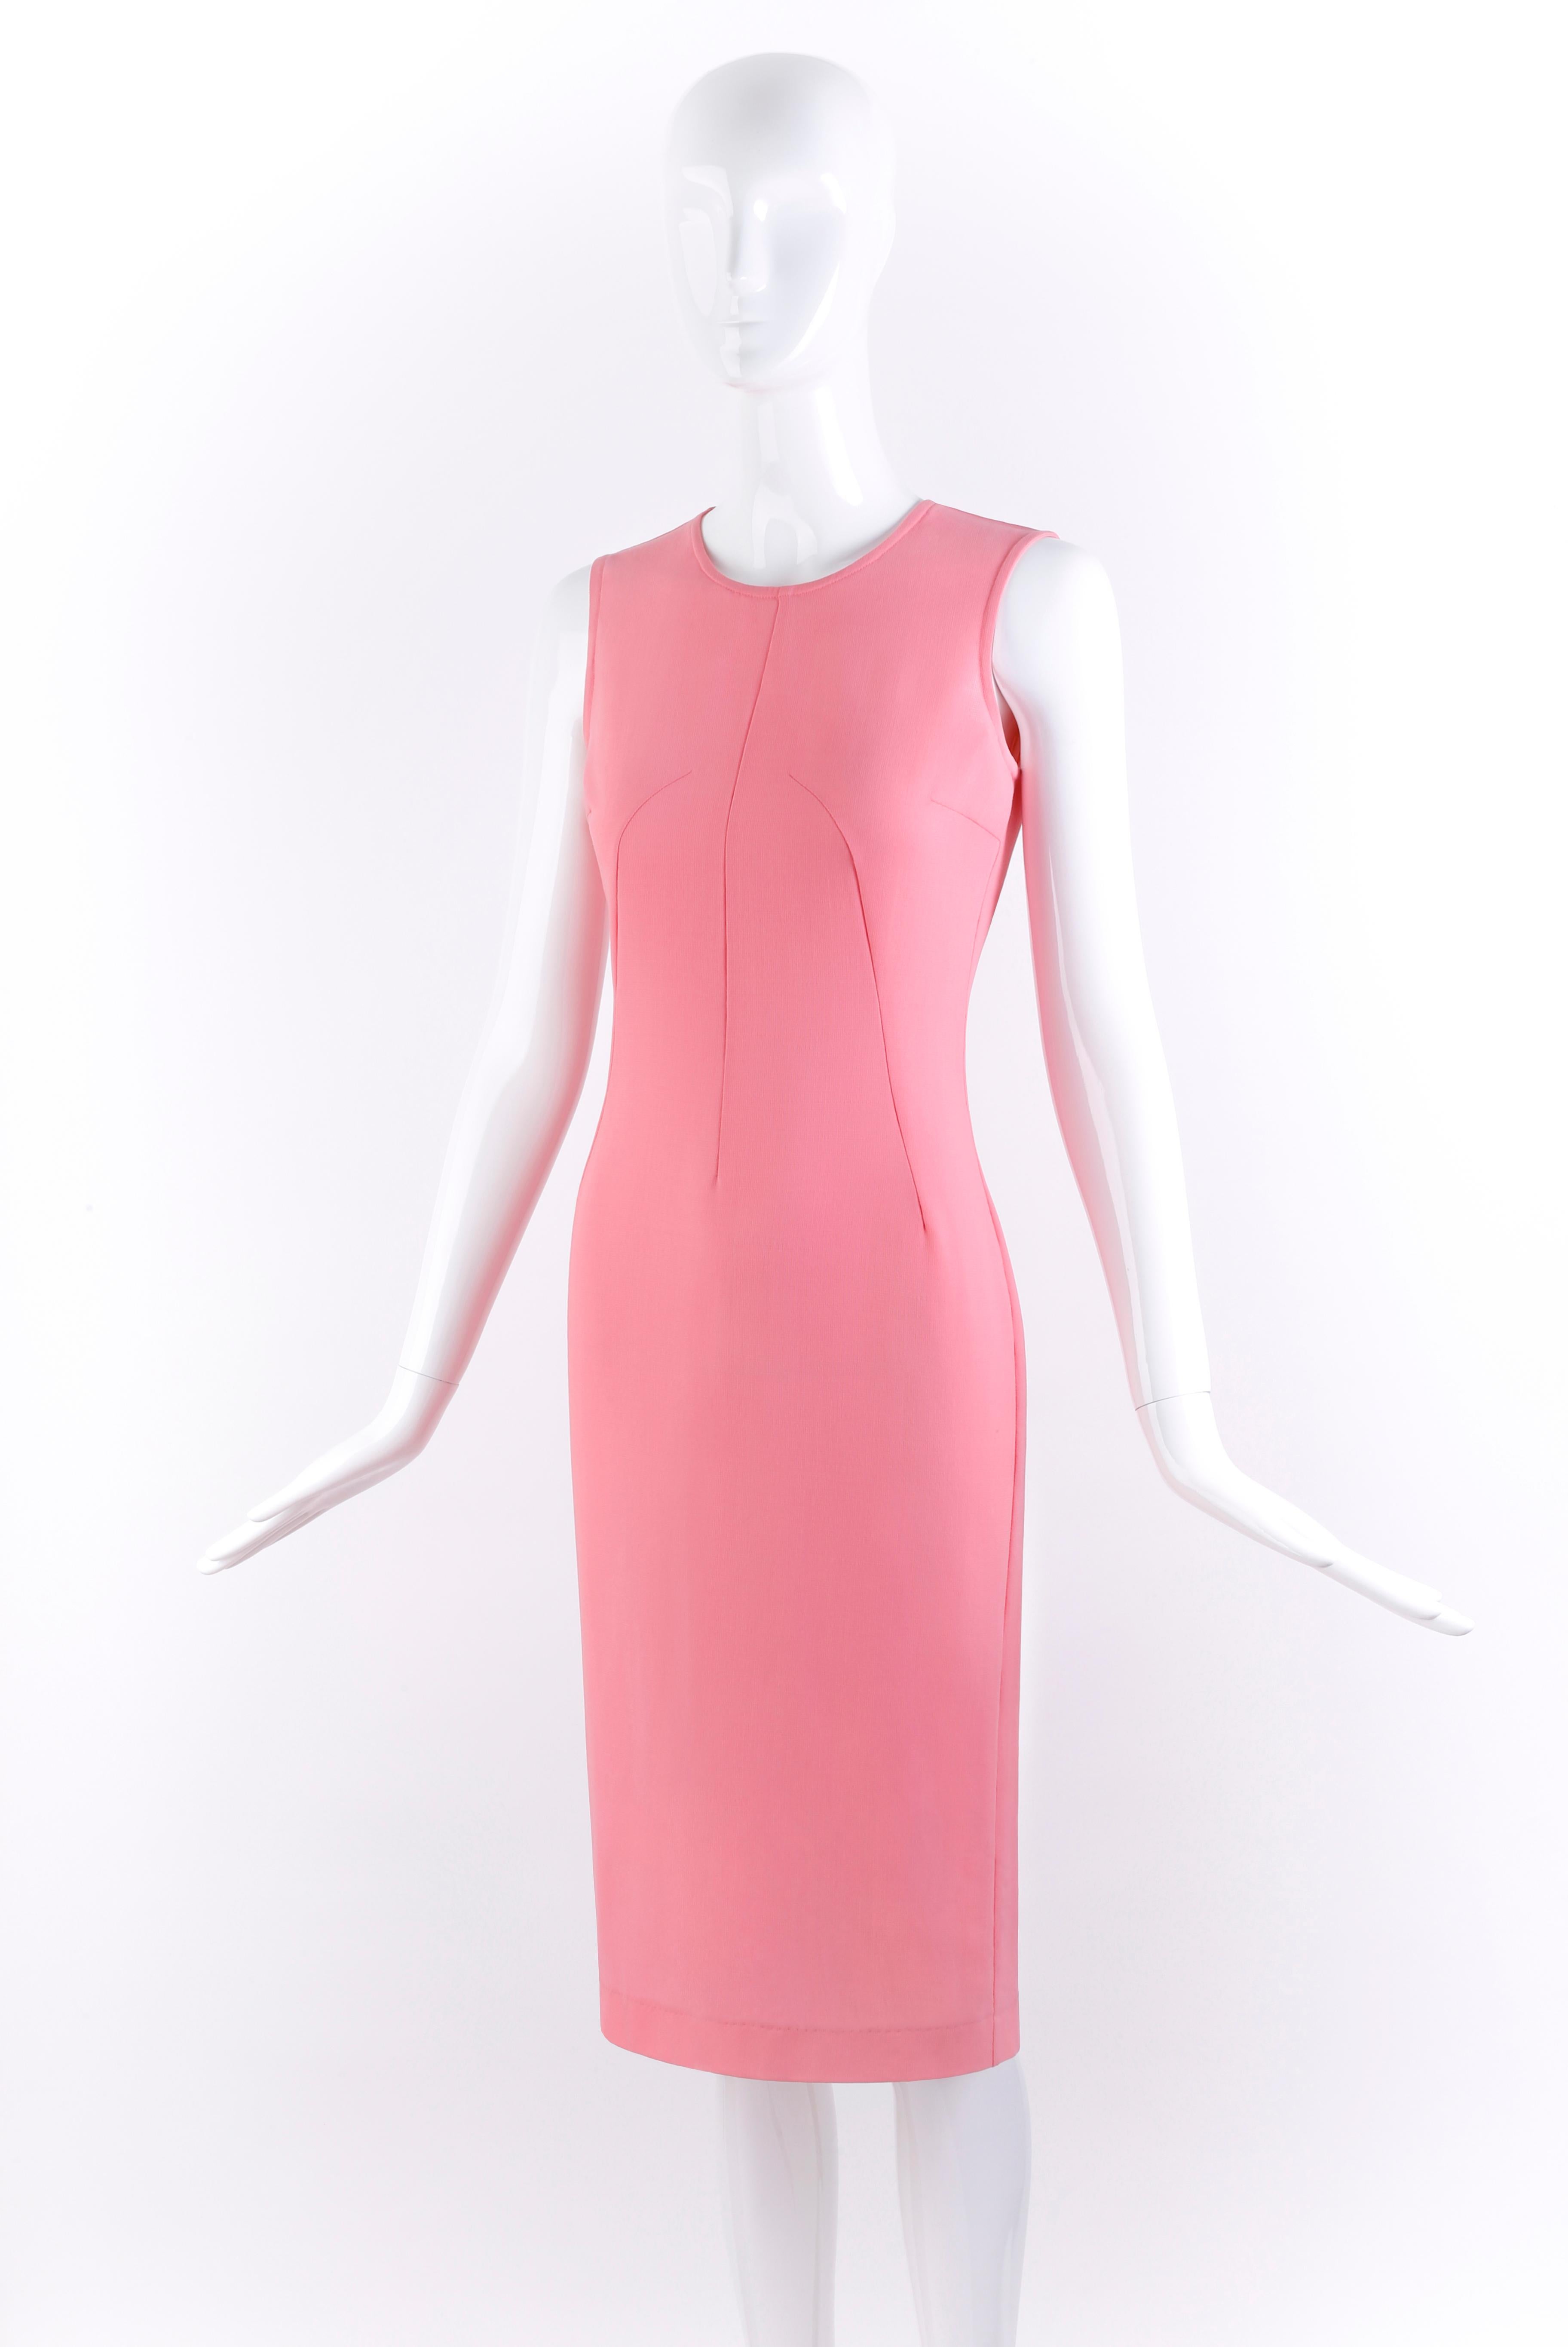 Women's Dolce & Gabbana Vintage 1990's Bubblegum Pink Sleeveless Fitted Sheath Dress 38 For Sale